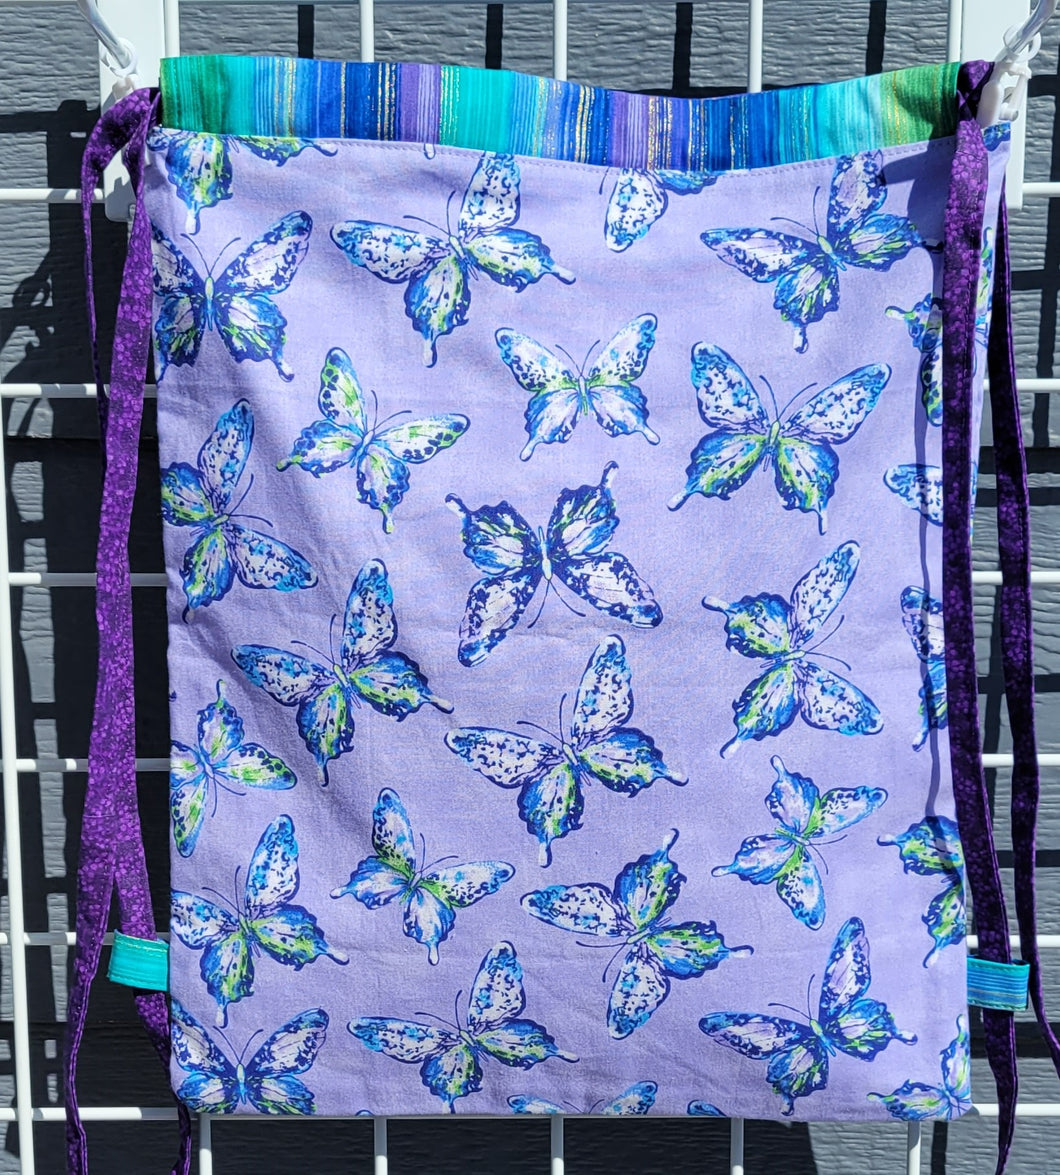 Cotton Drawstring Tote - Purple Butterflies II